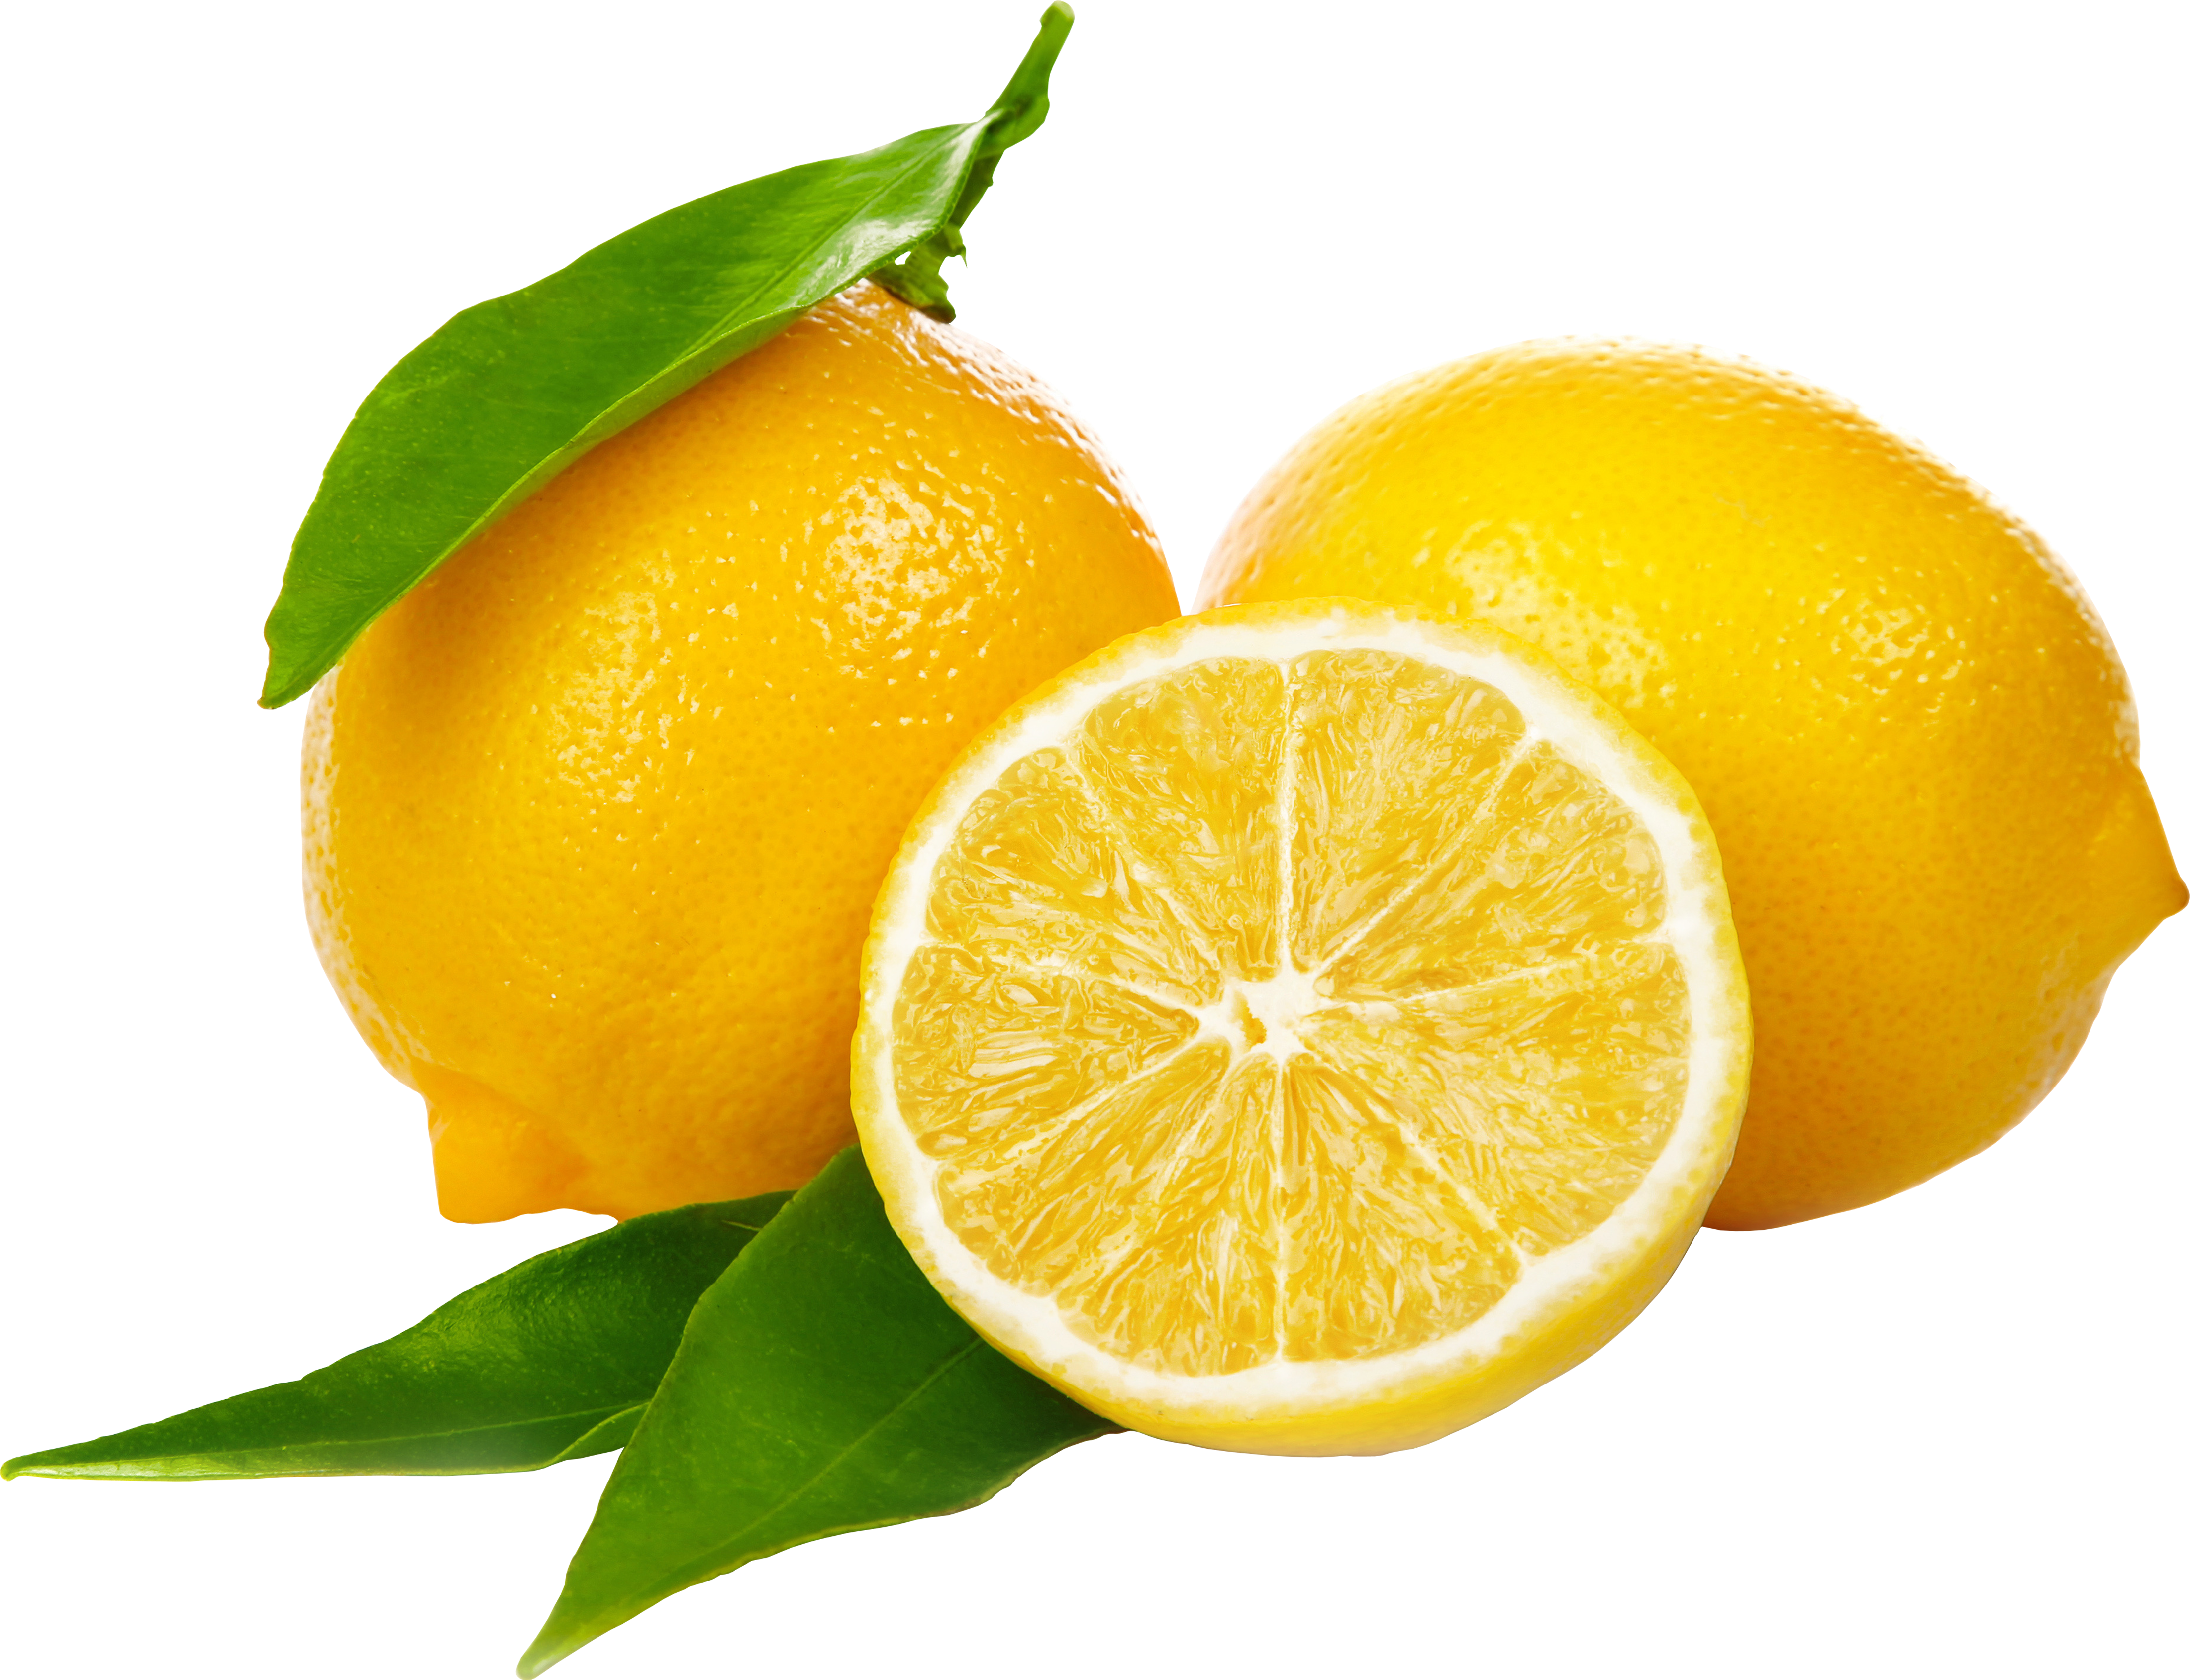 PNG File Name: Lemon PlusPng.